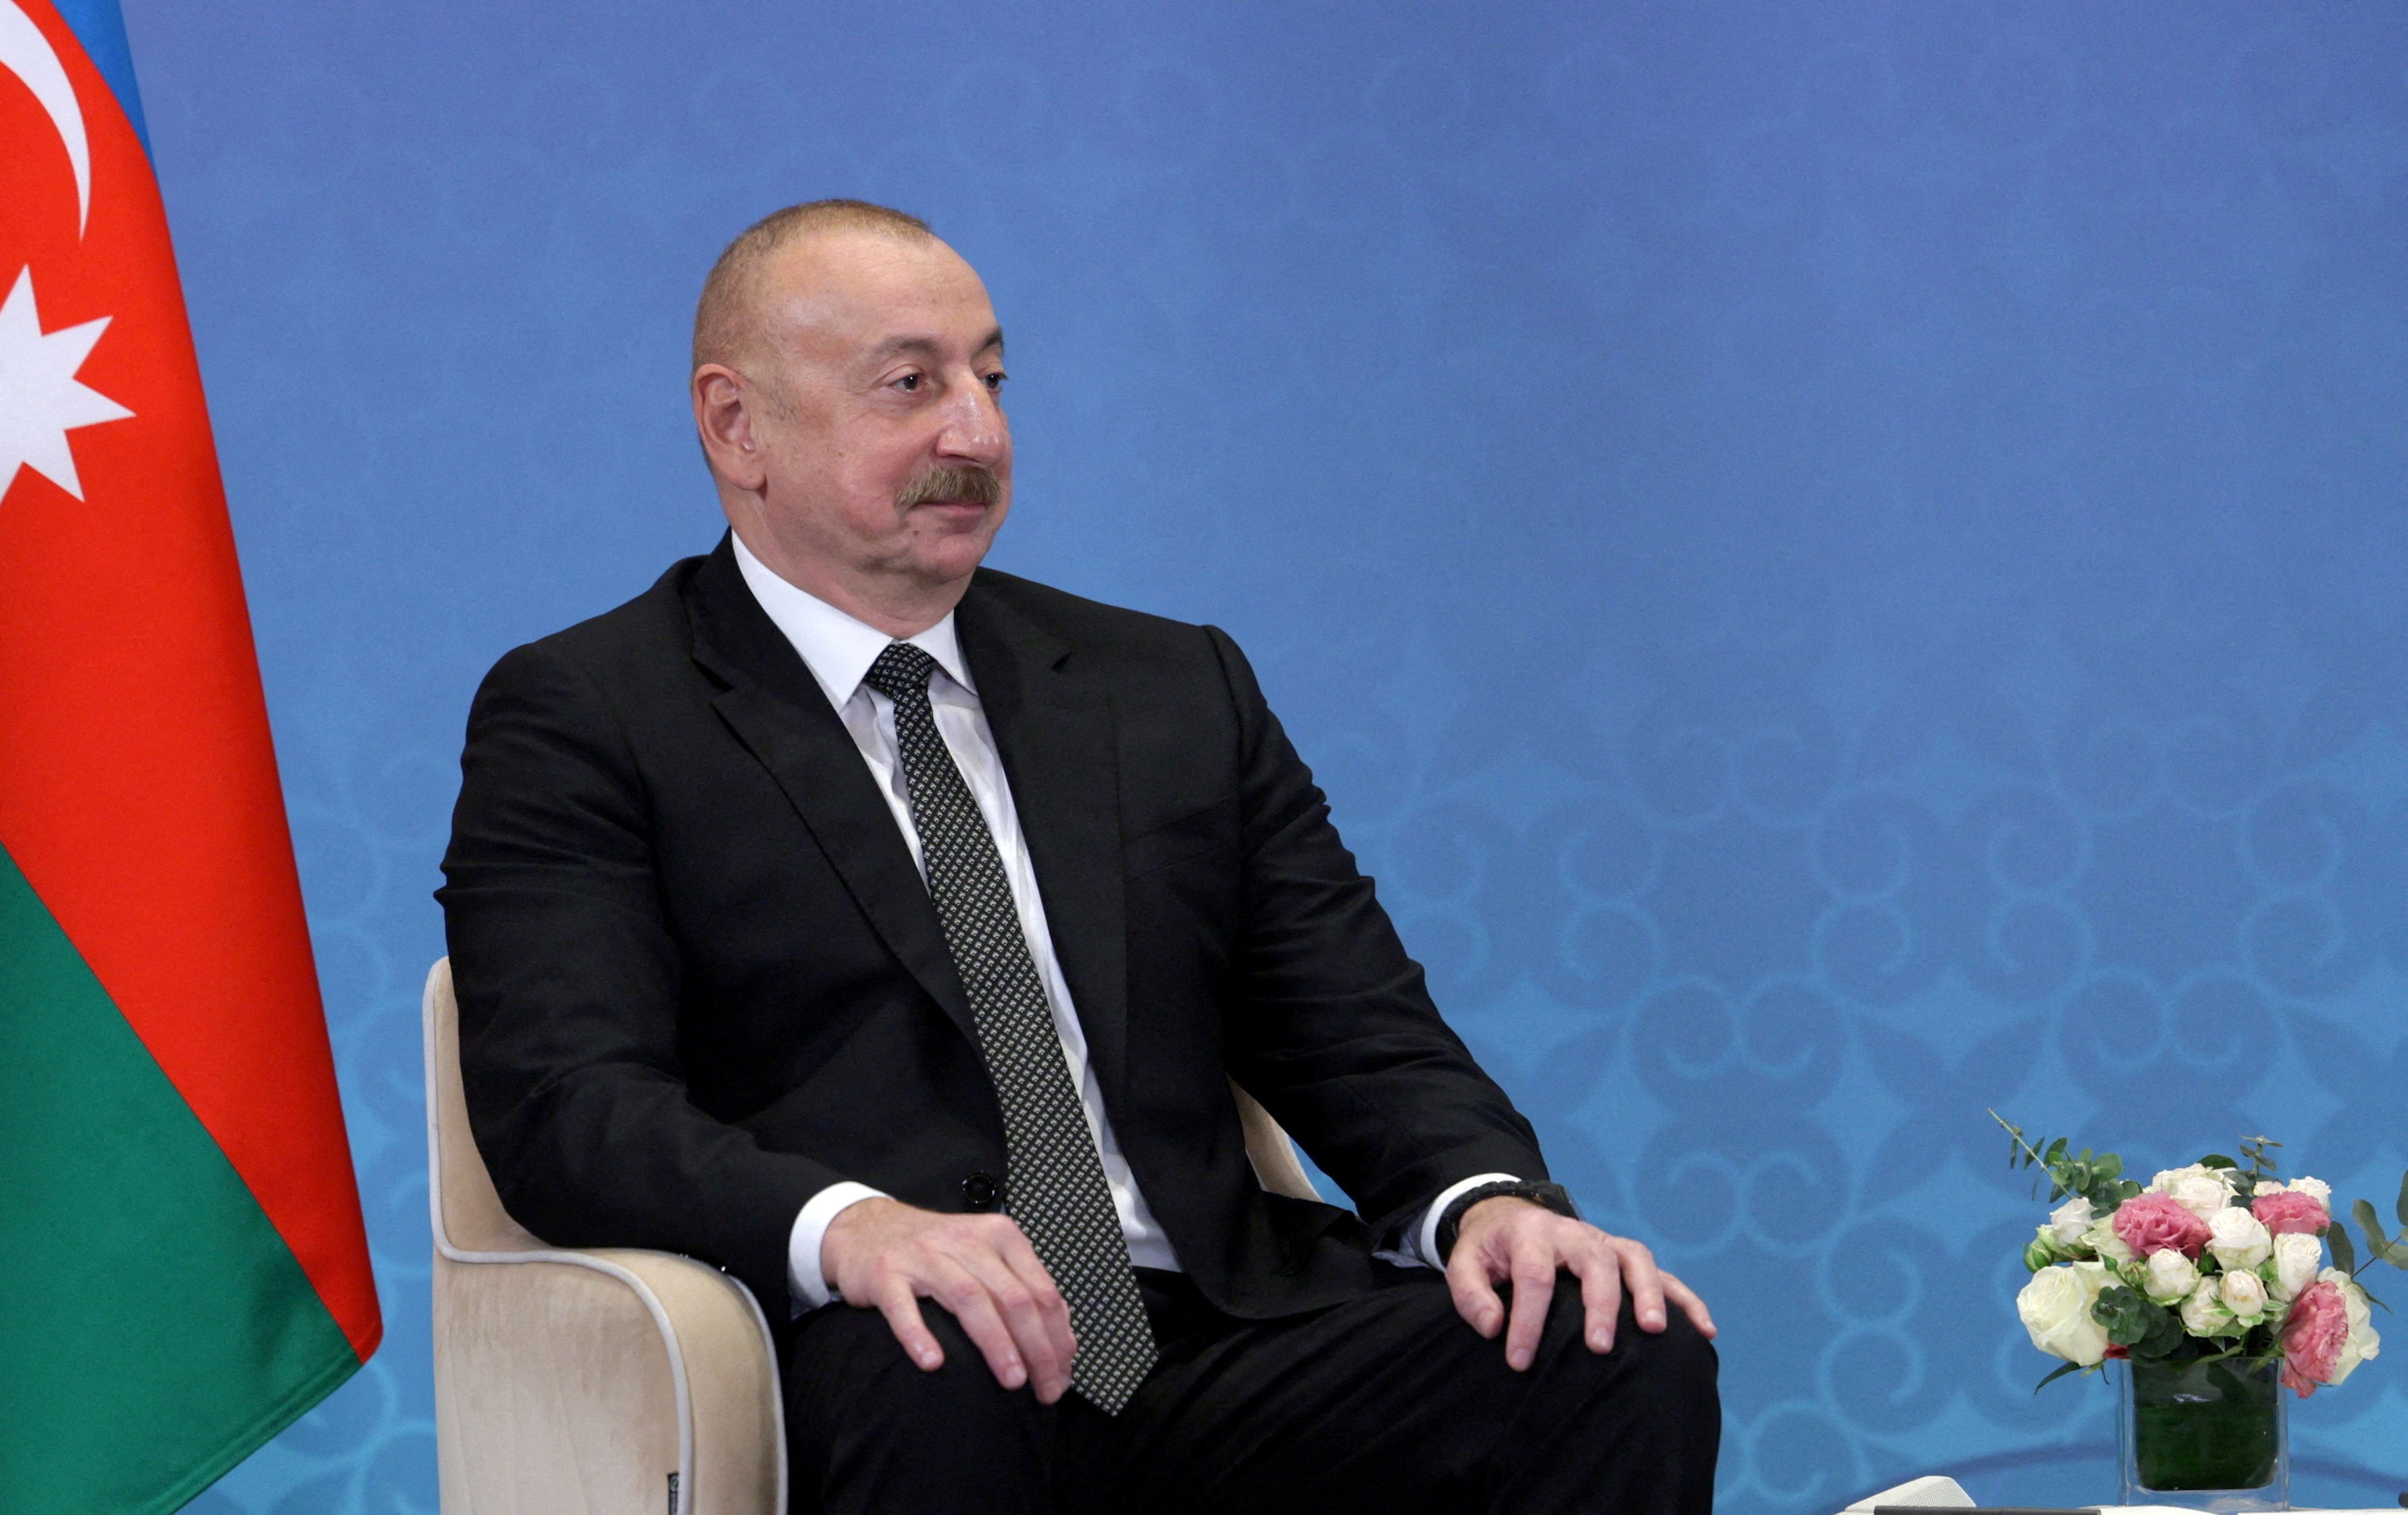 Azeri President Aliyev meets Putin  in Astana